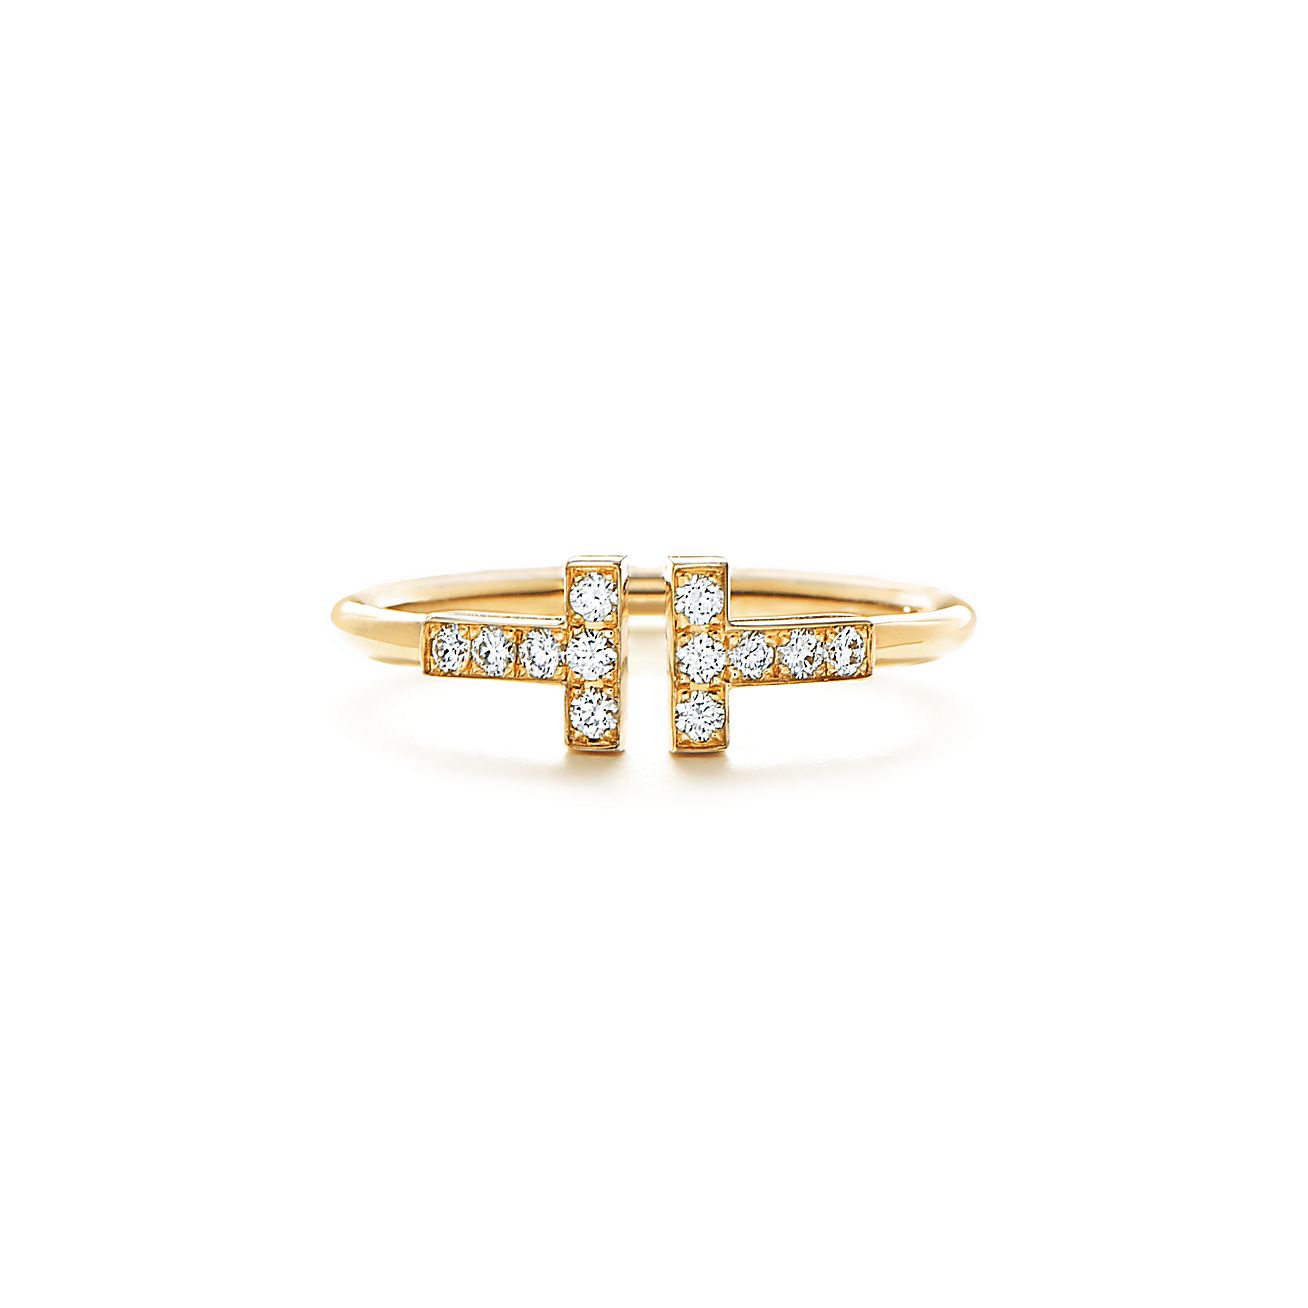 Tiffany TDiamond Wire Ring
in 18k Gold